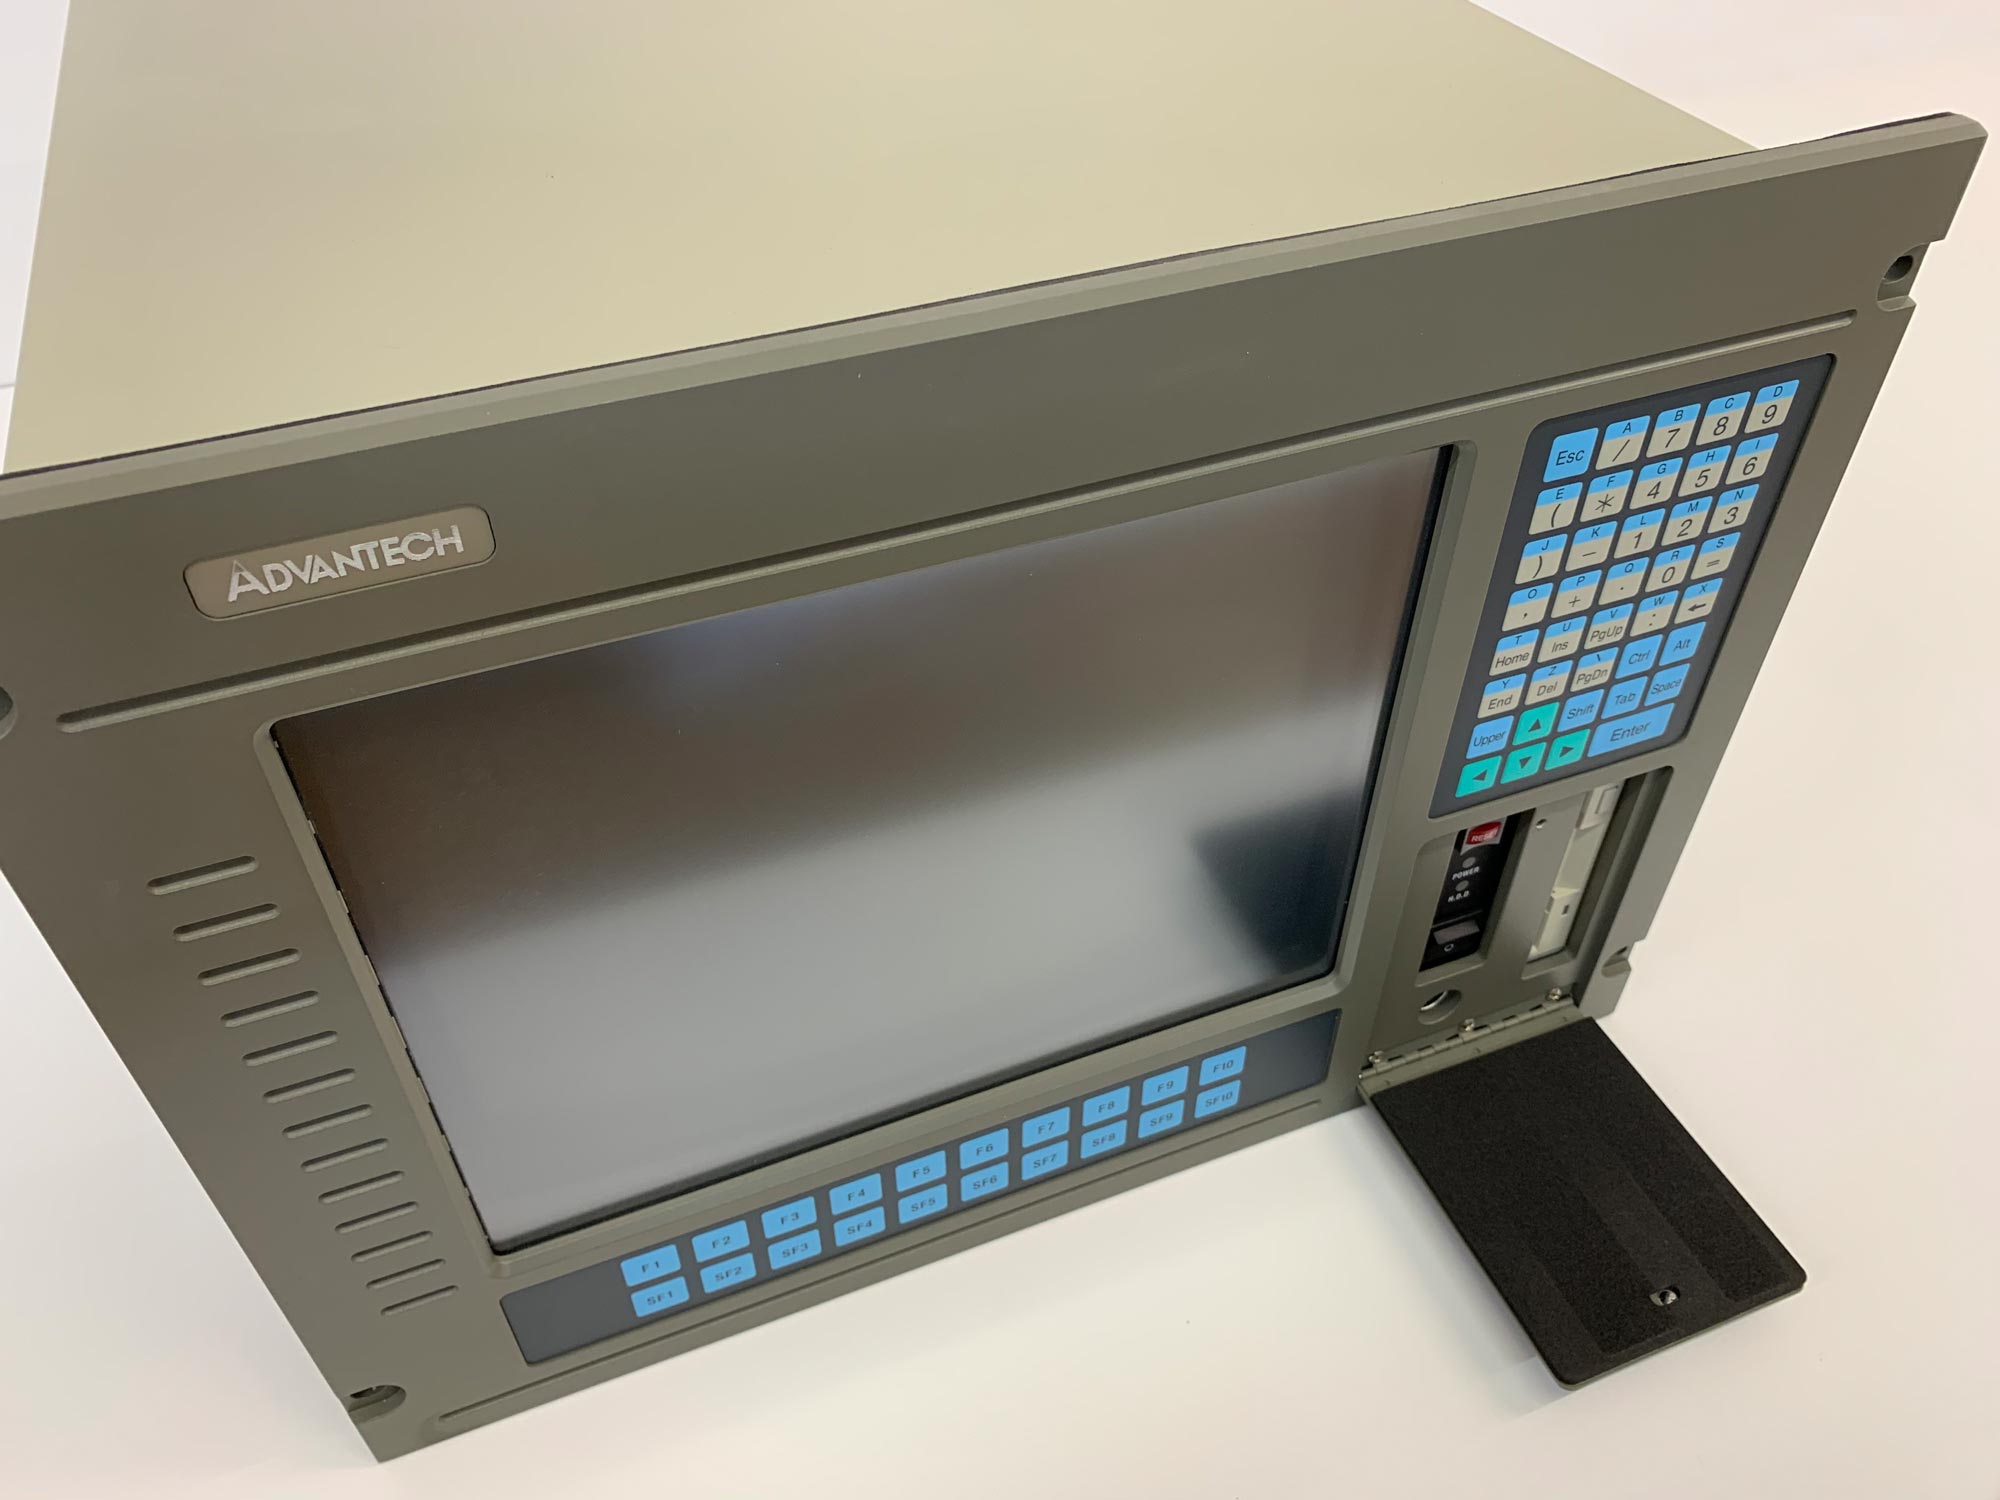 AWS-825-T - Industrie Workstation mit 15" CRT Display